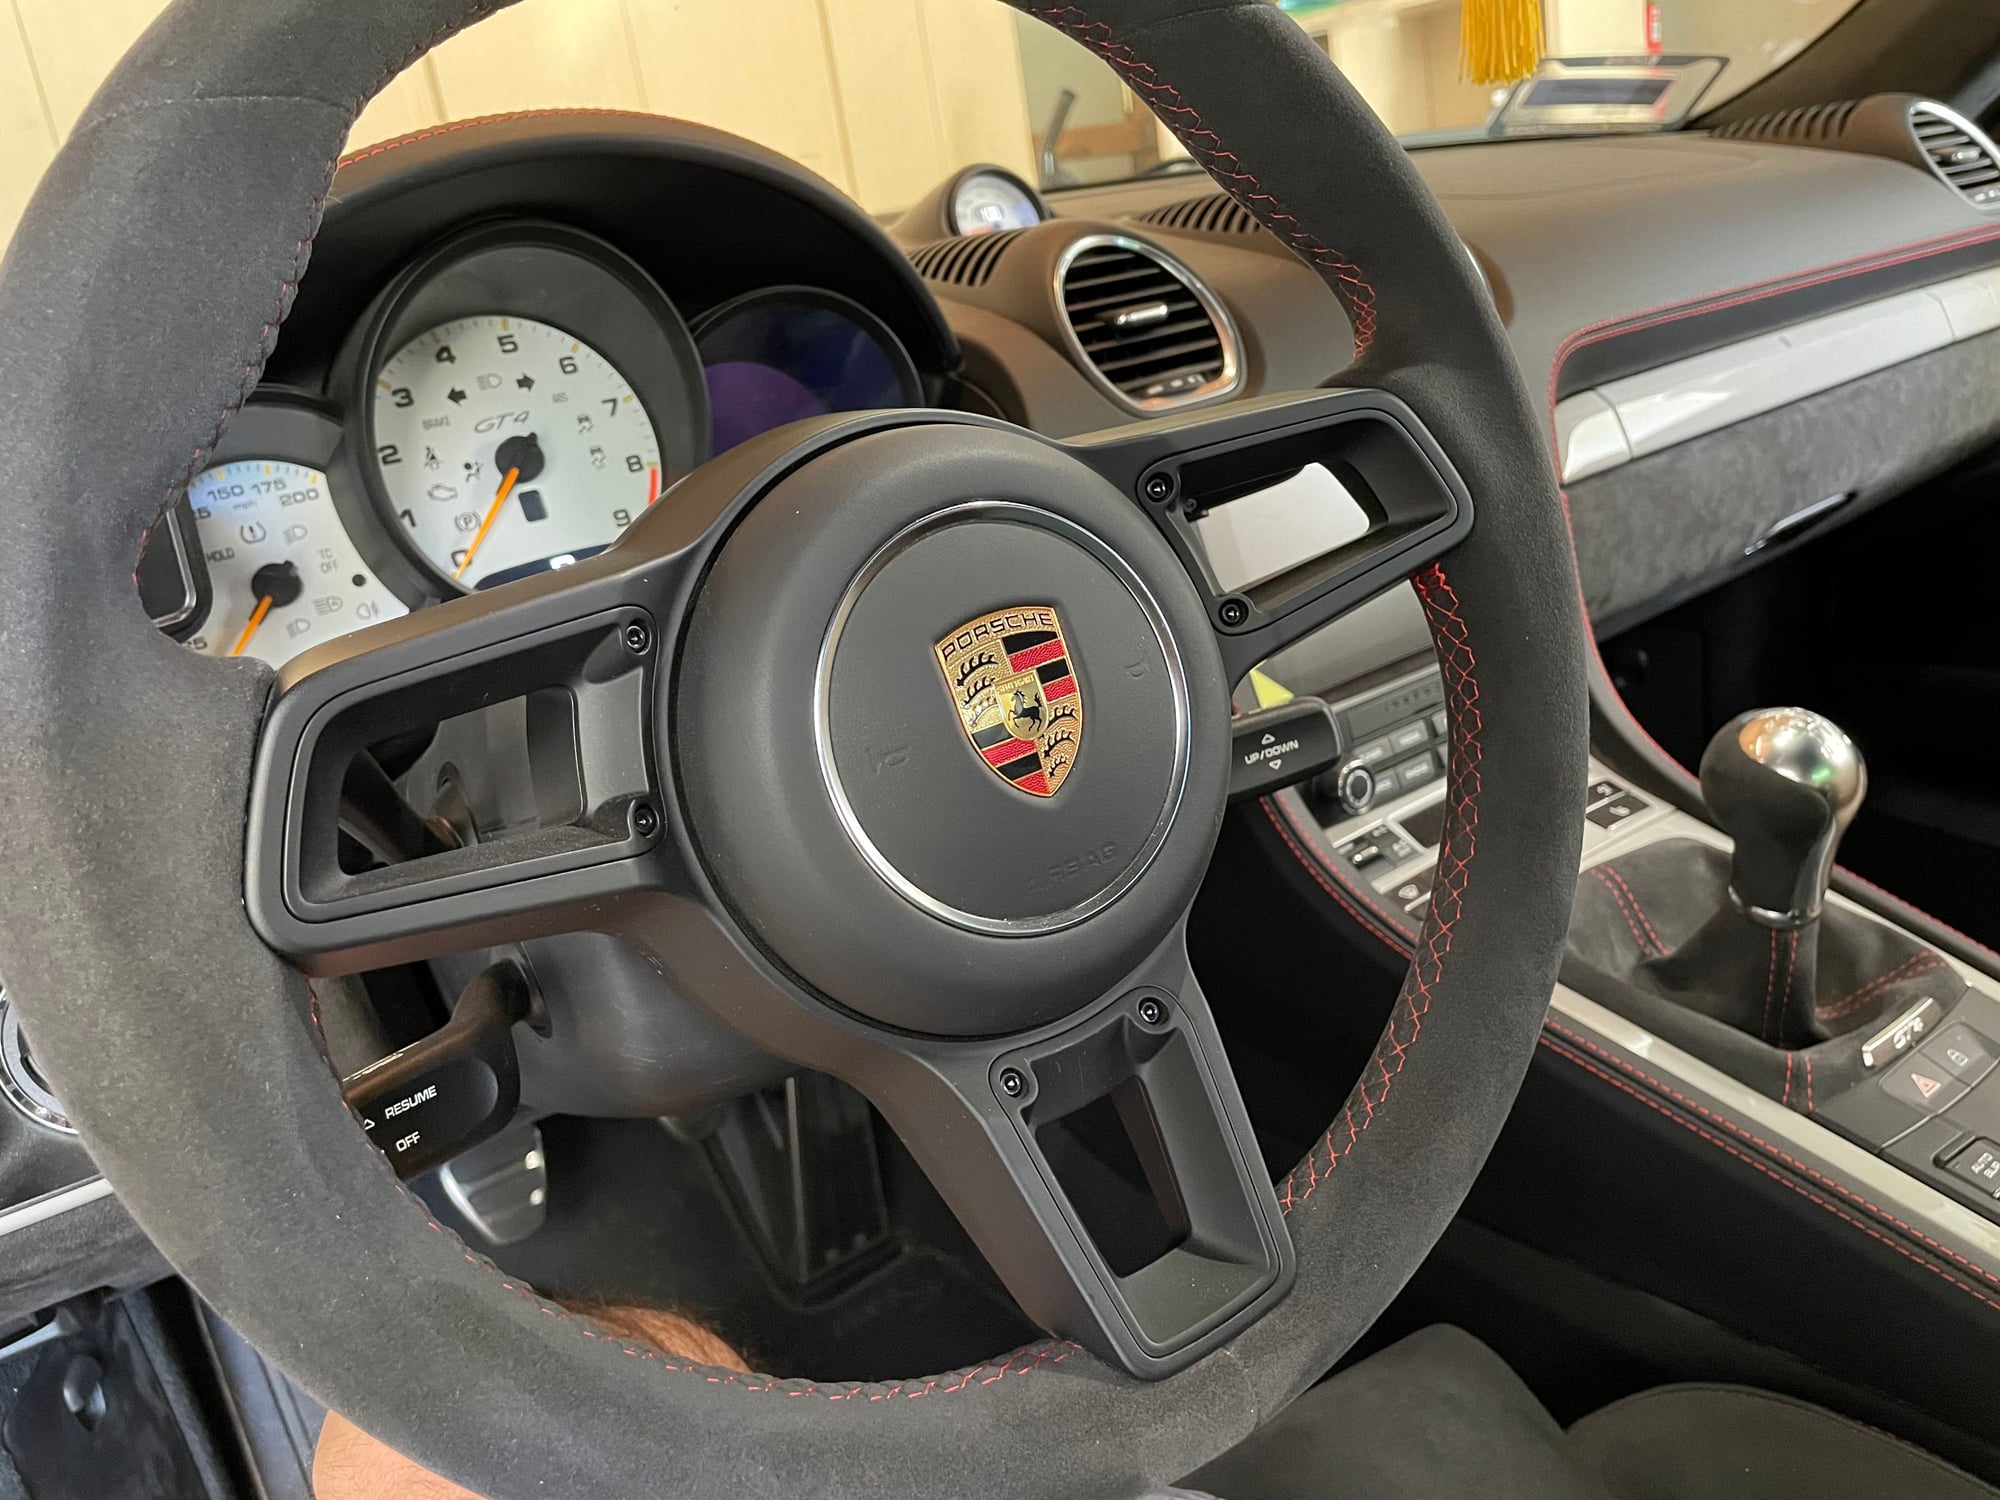 2020 Porsche 718 Cayman - Chalk 718 GT4 - Used - VIN WPOAC2A86LK289695 - 5,900 Miles - Thousand Oaks, CA 91361, United States